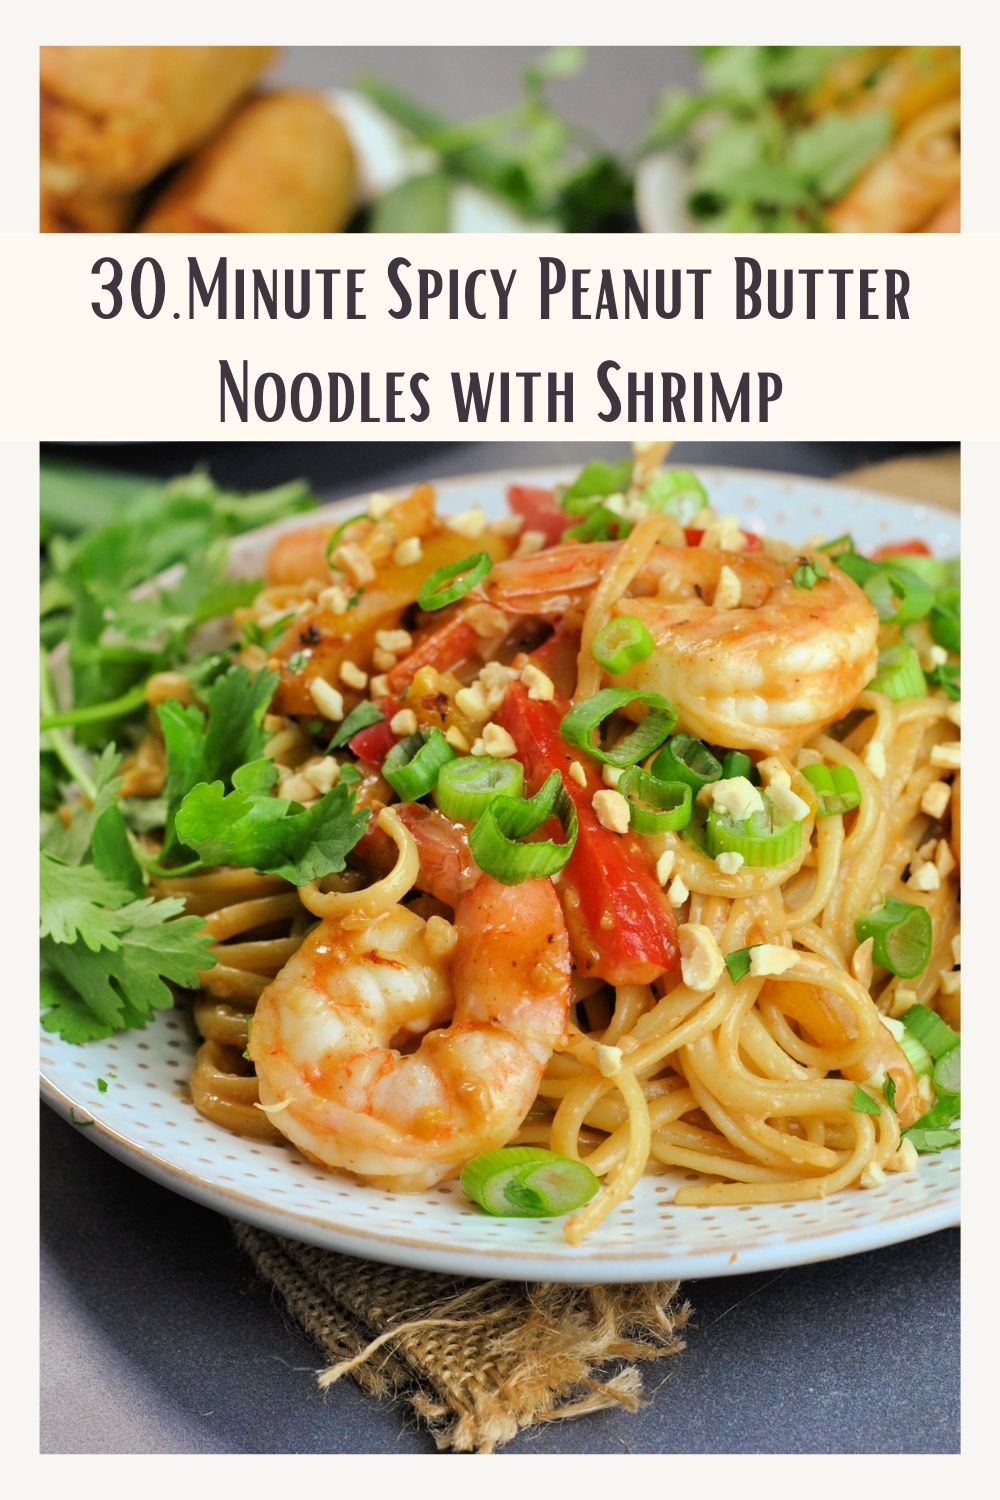 30-Minute Spicy Peanut Butter Noodles with Shrimp via @preventionrd